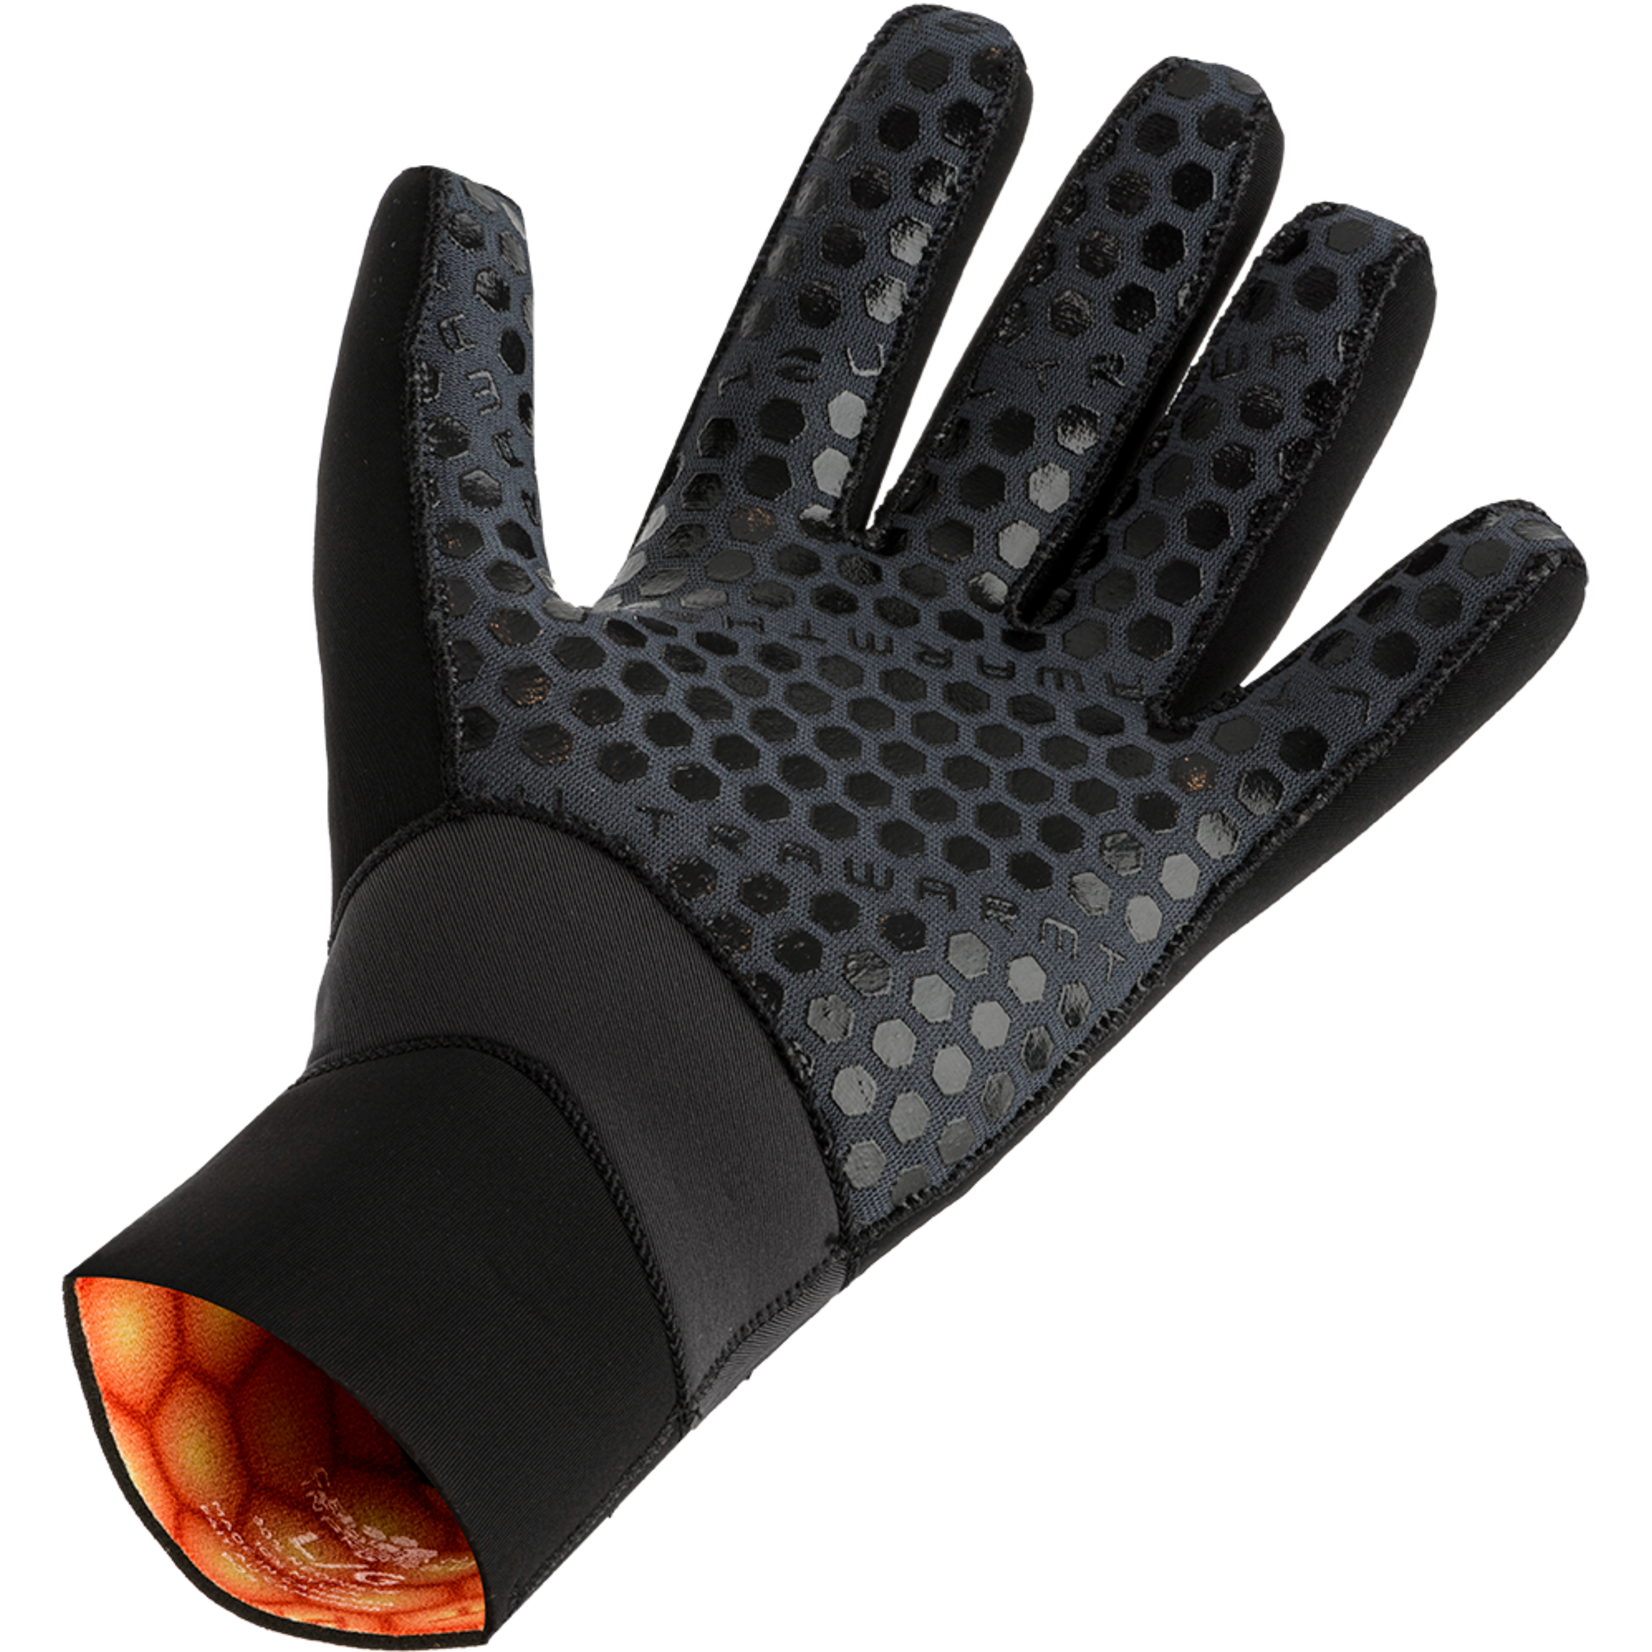 Bare Bare Ultrawarmth Gloves 3mm